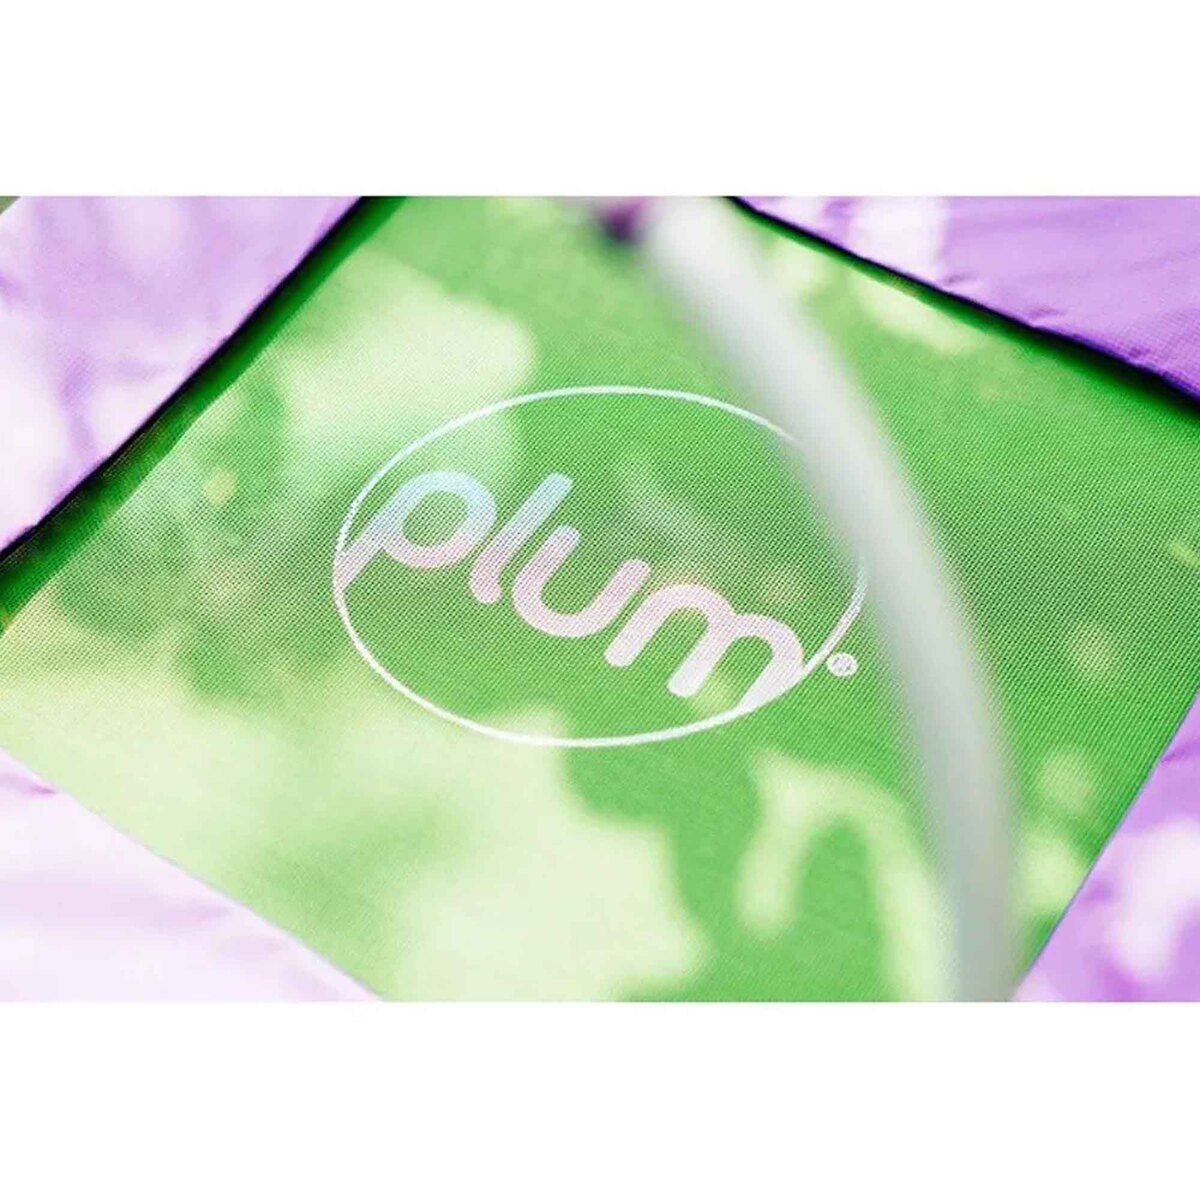 Plum Unisex Junior Bouncer Children's Trampoline, Purple, 101401A82